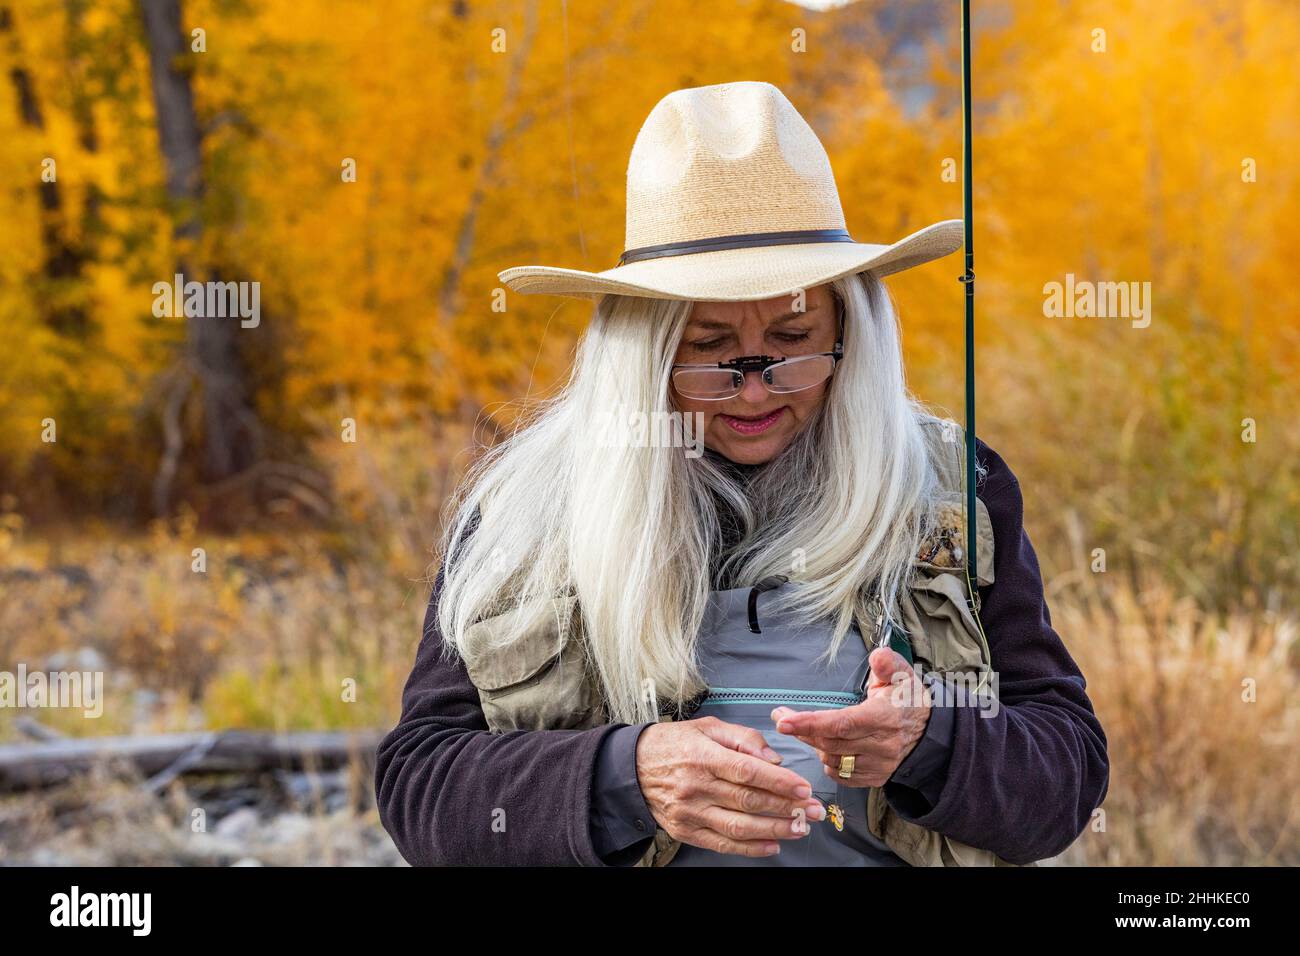 USA, Idaho, Bellevue, Senior woman putting bait on fishing rod Stock Photo